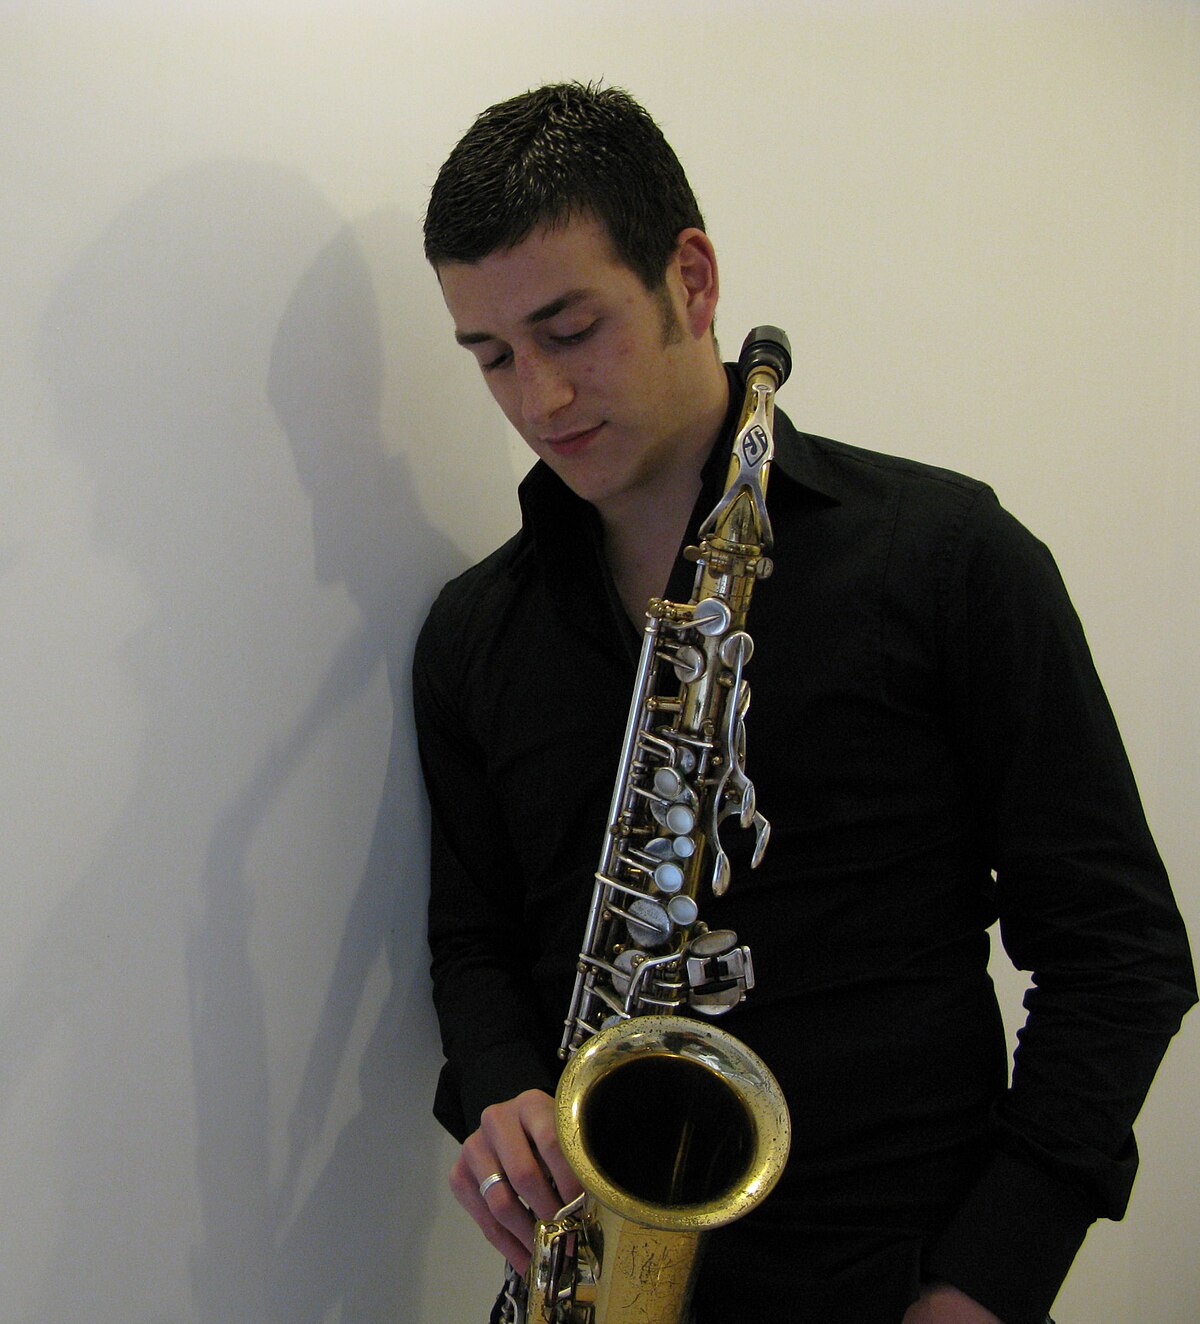 Alto saxophone - Wikipedia